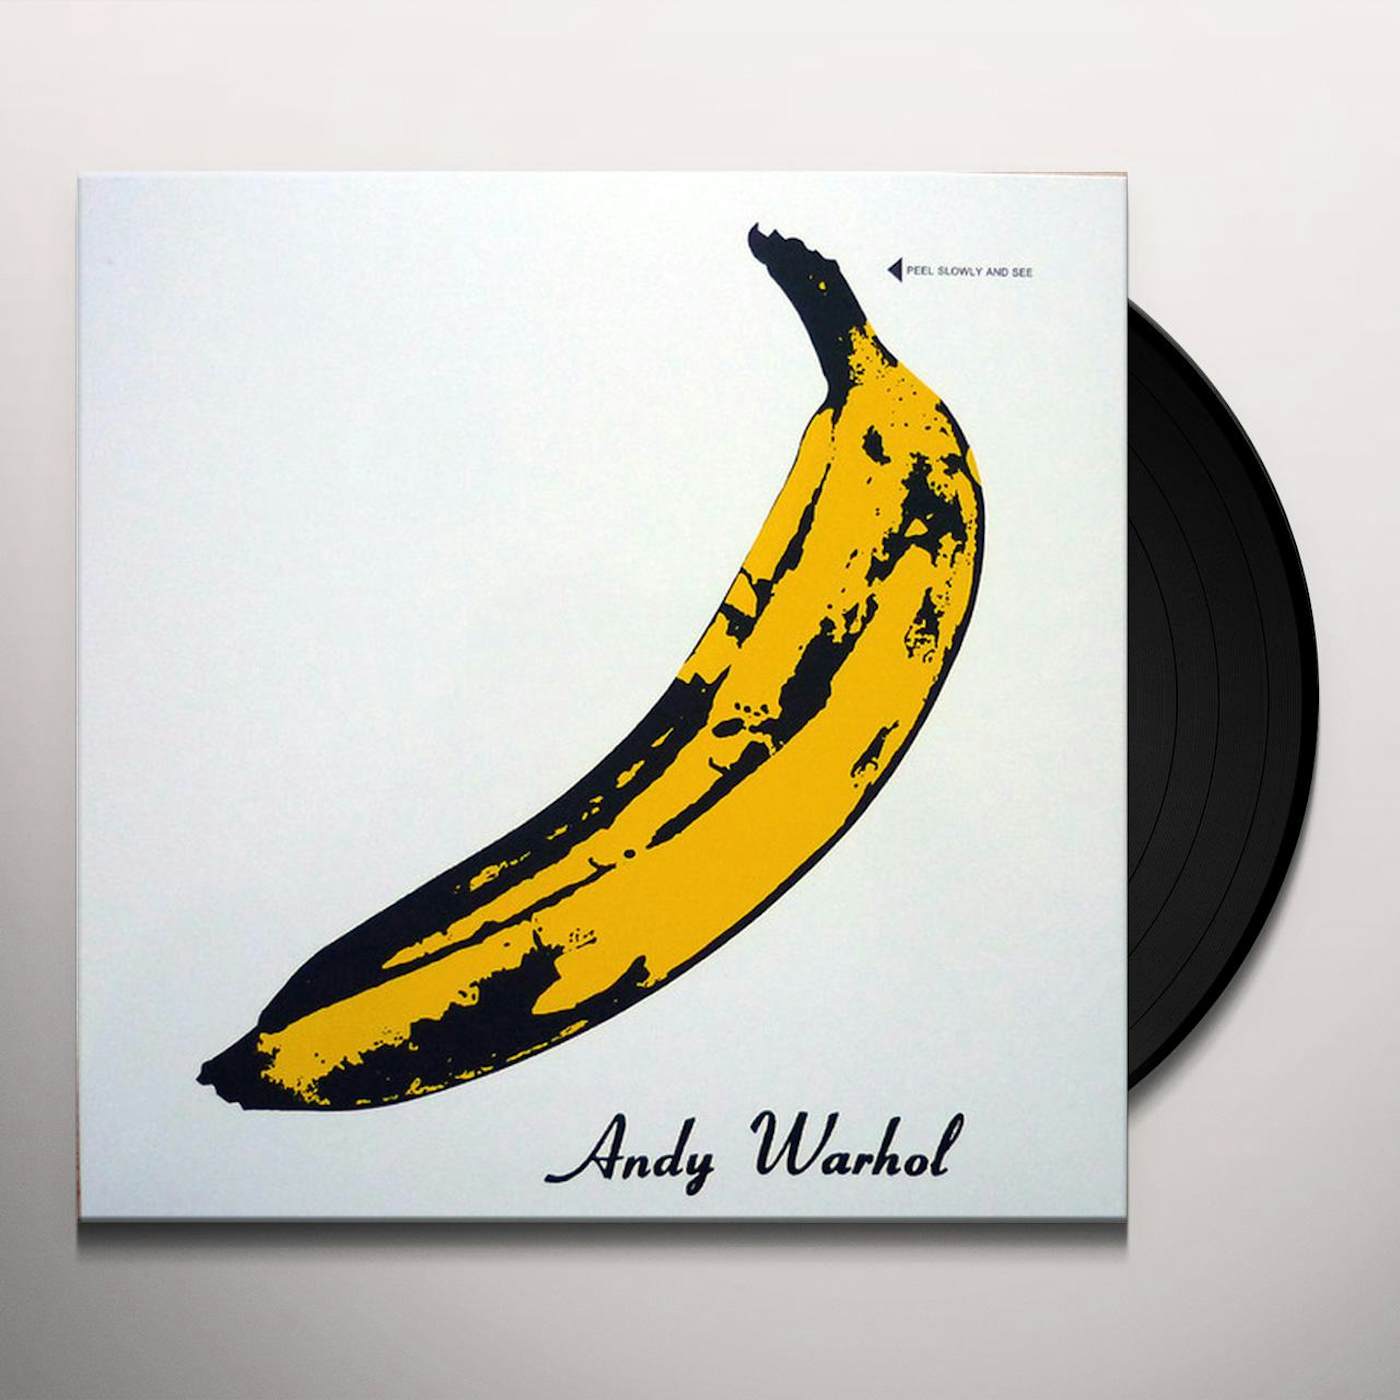 The Velvet Underground Vinyl Record